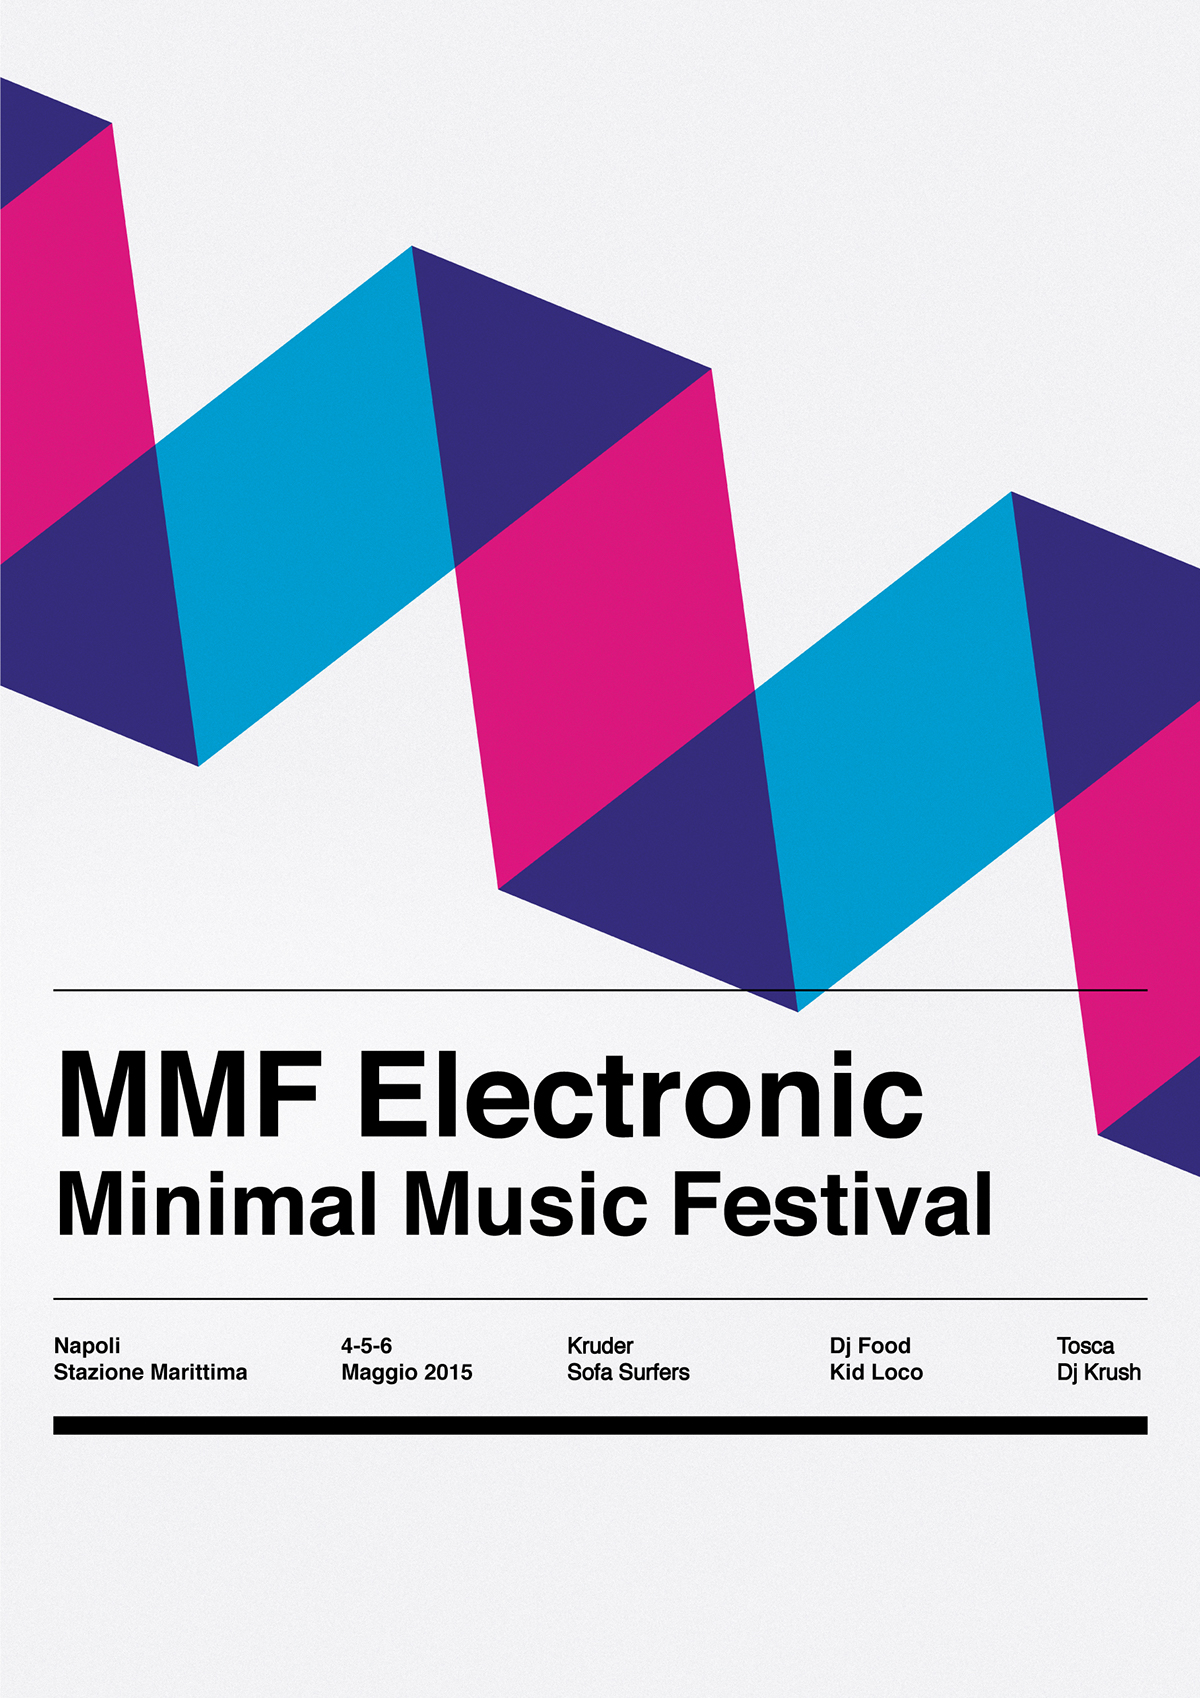 minimal Minimal Music festival techno house electronic Electro music electronic music House music music poster electronic poster minimal poster helvetica vignelli massimo vignelli